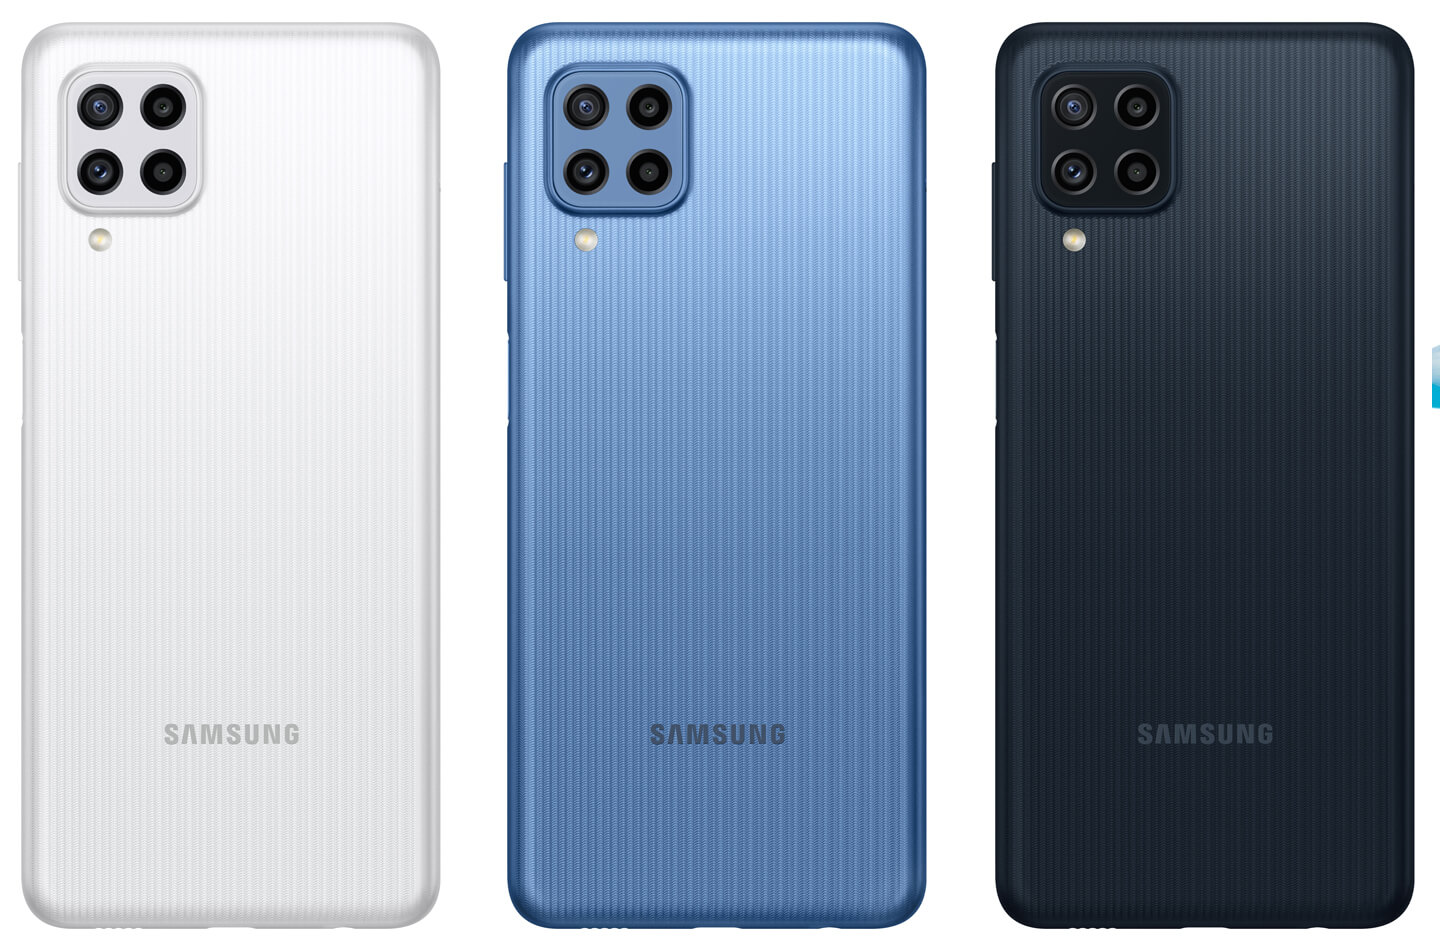 Samsung M22 Характеристики И Цена